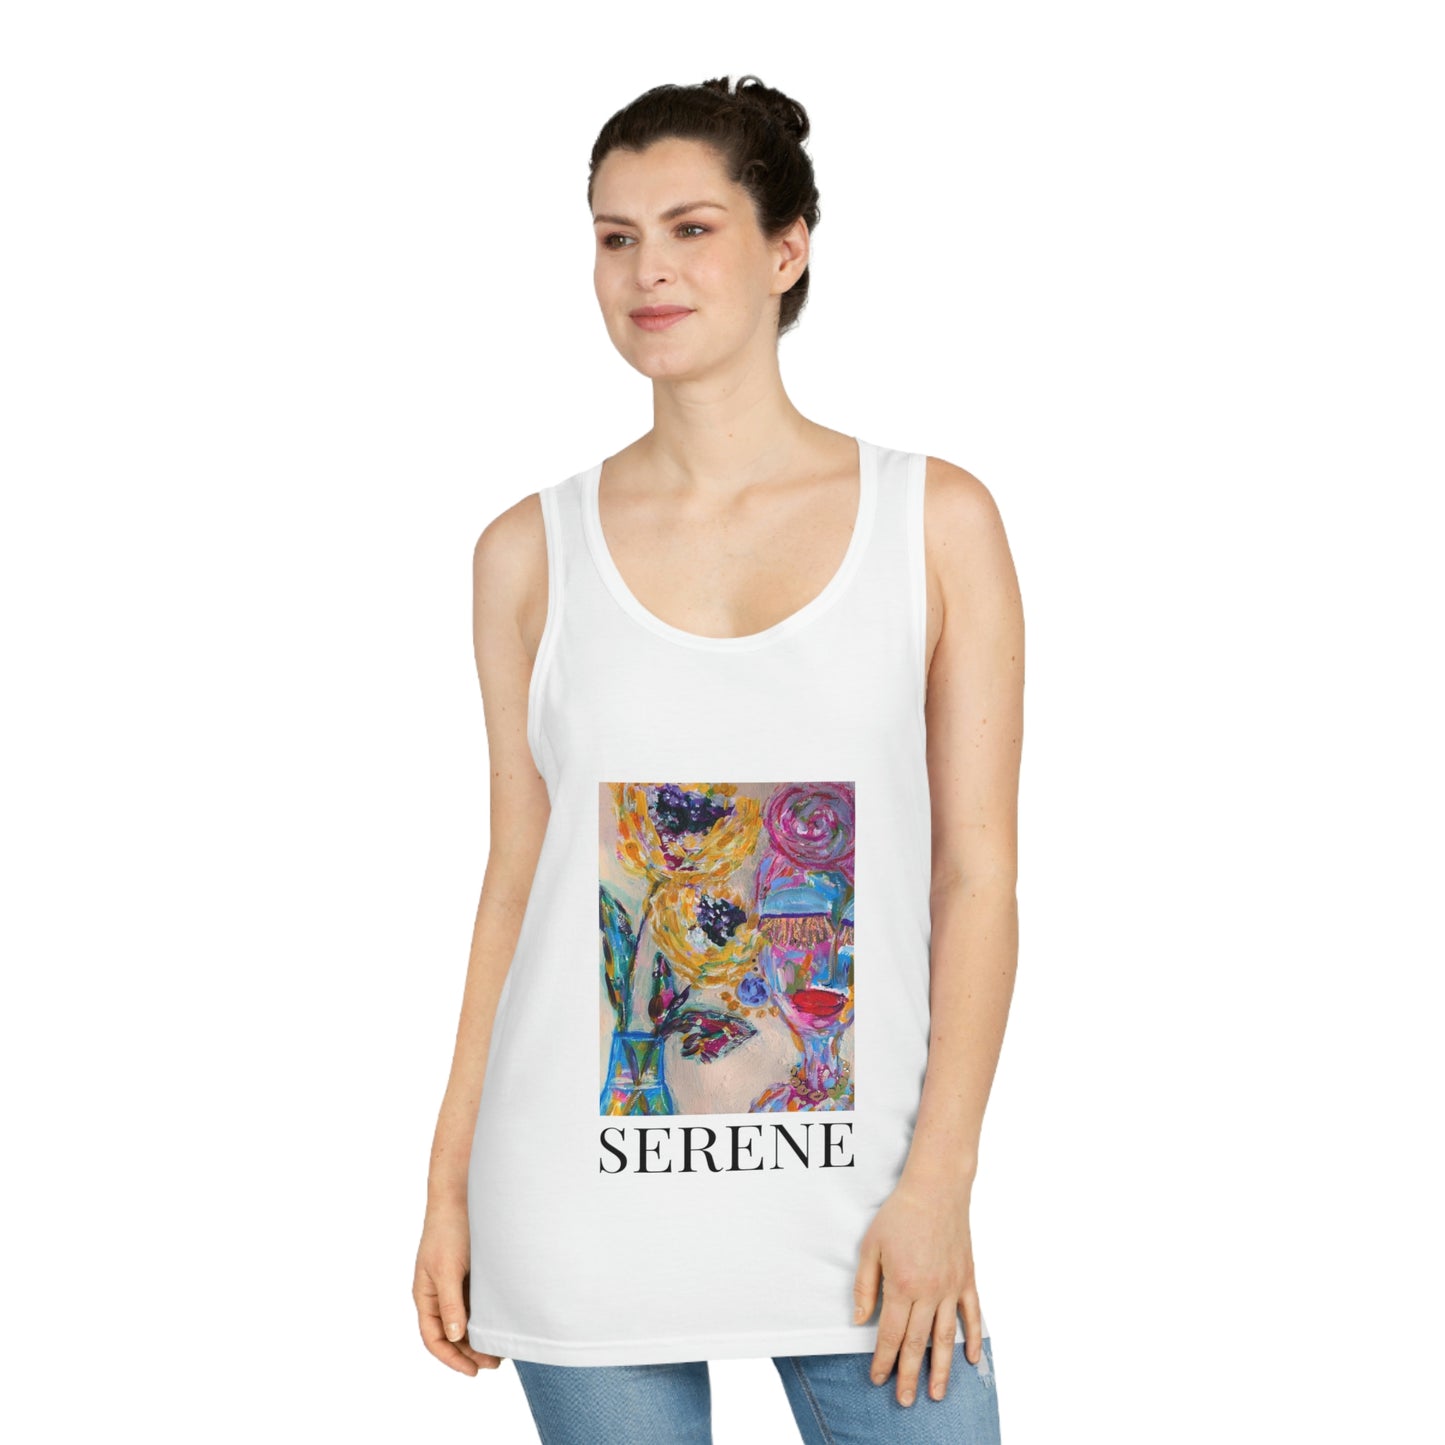 "Serene" GIRL TALK ART Unisex Softstyle Tank Top